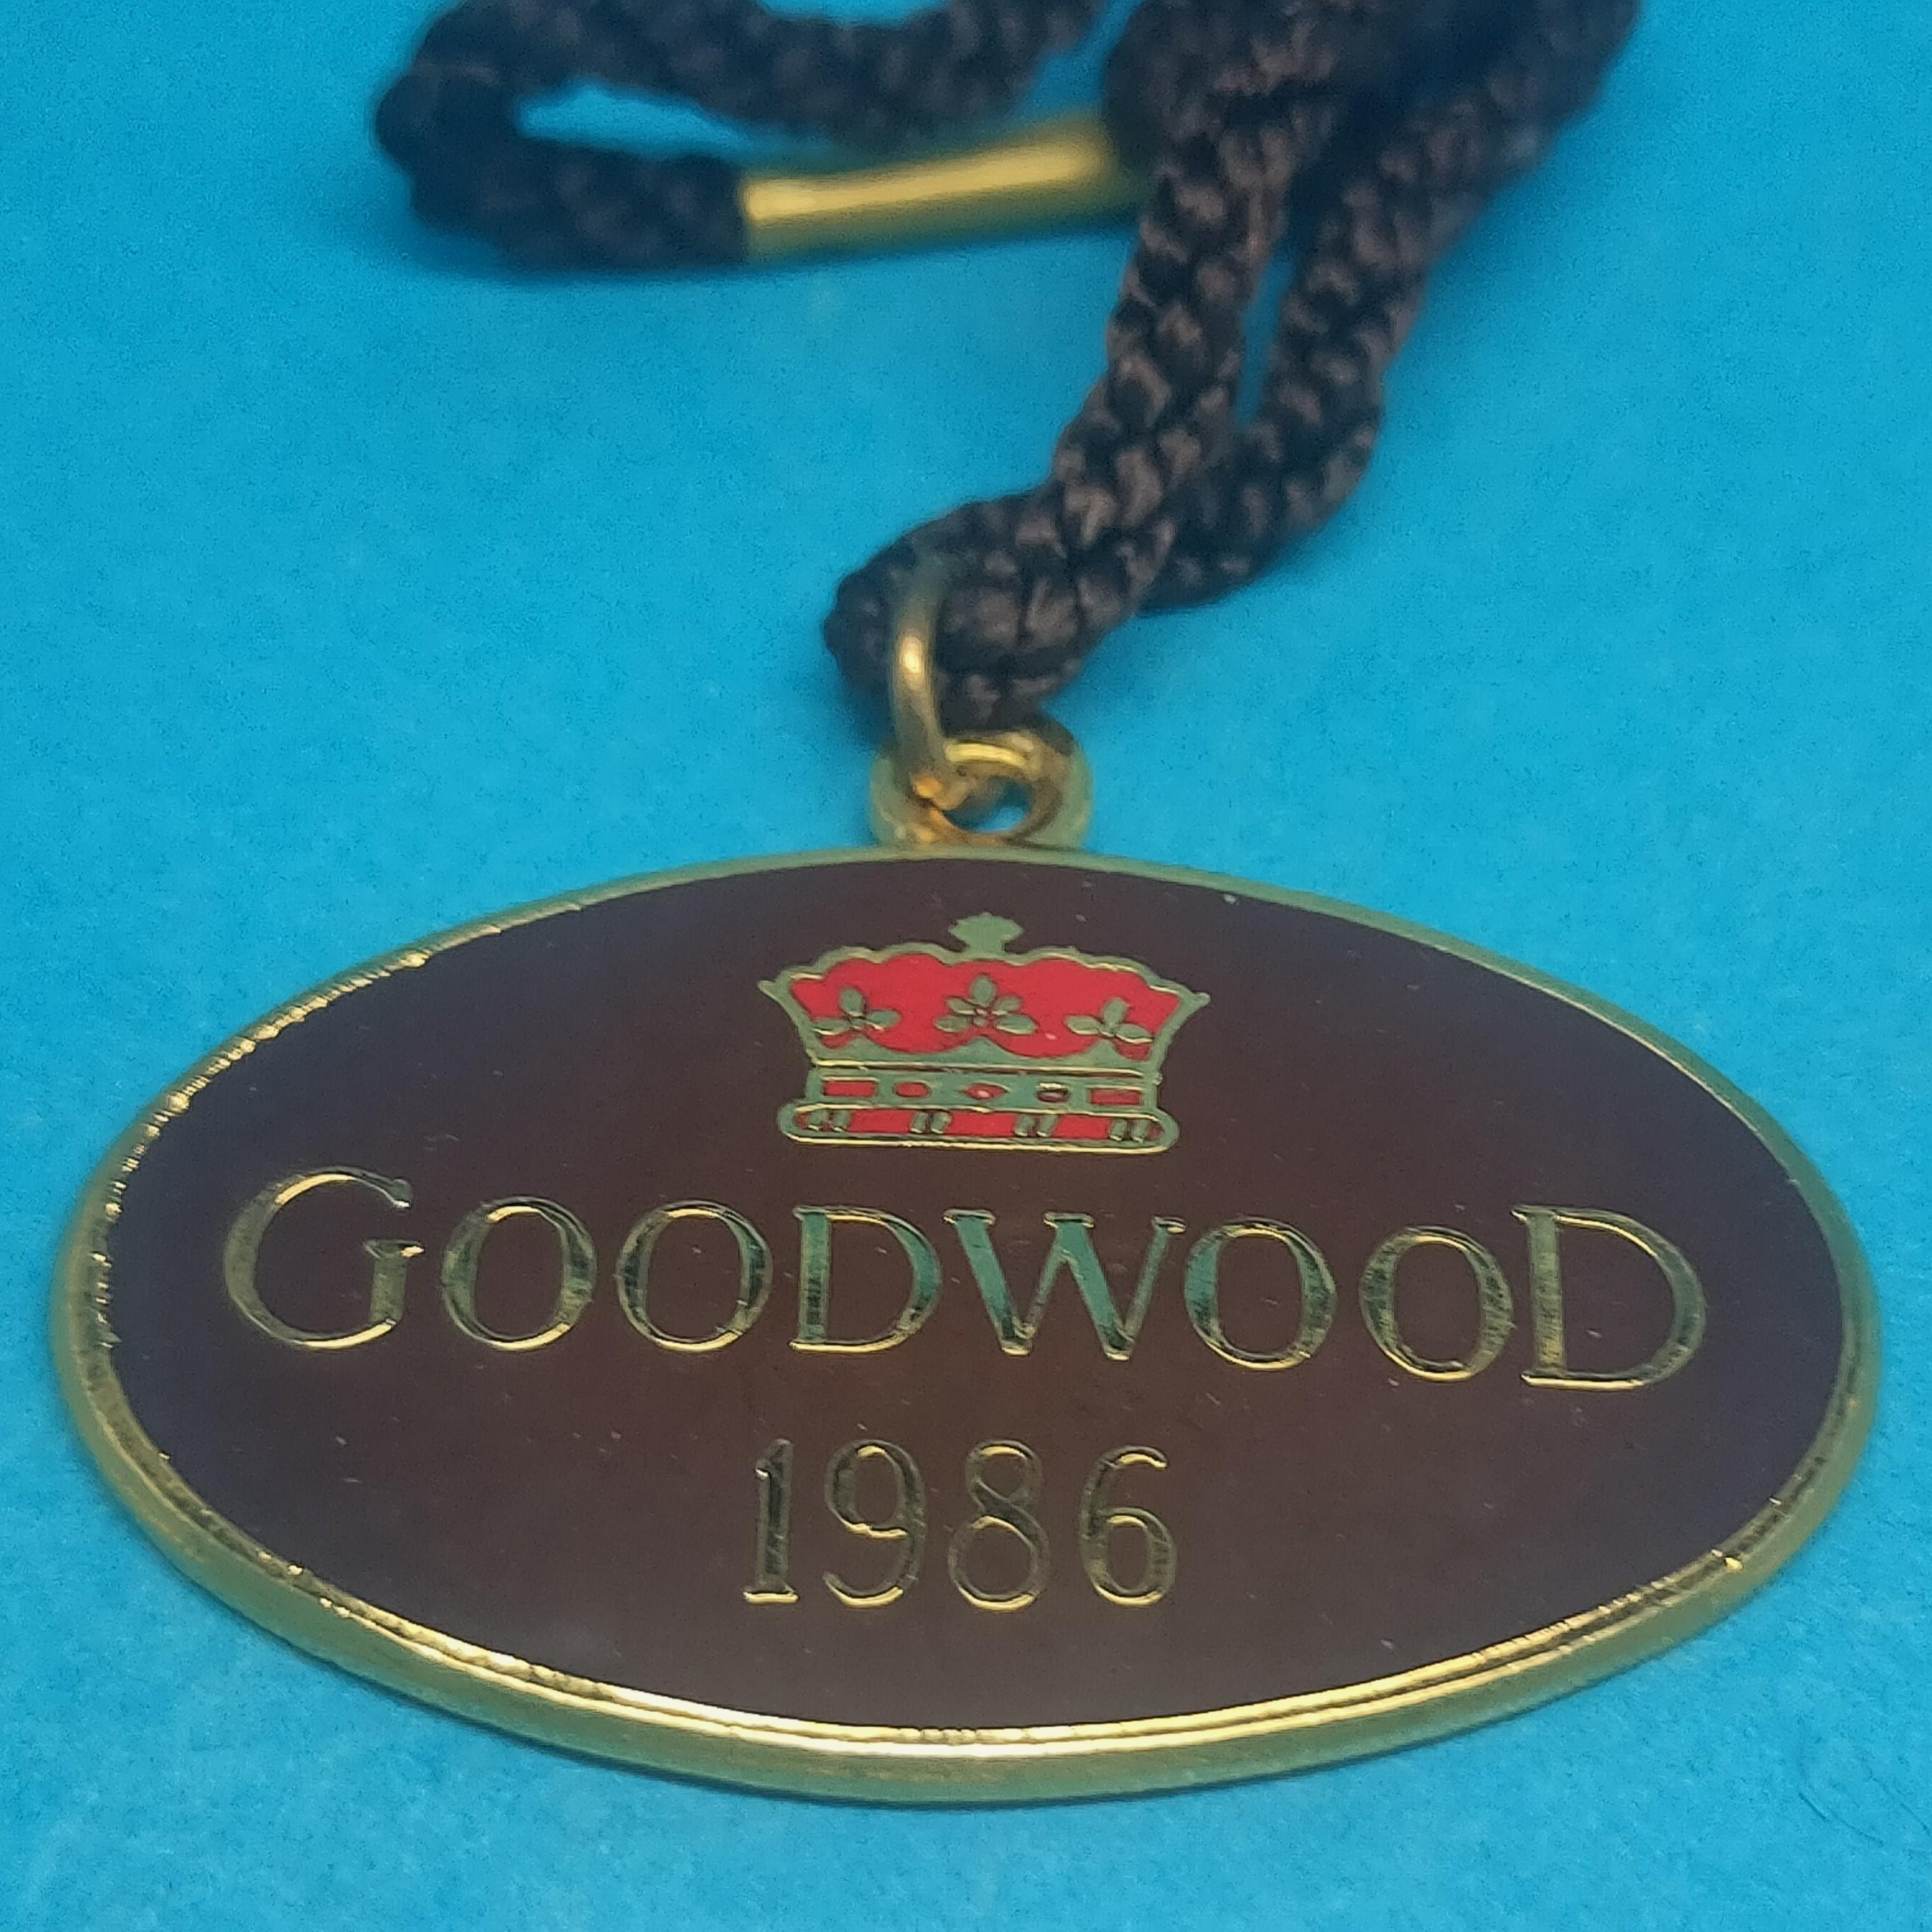 Goodwood 1986